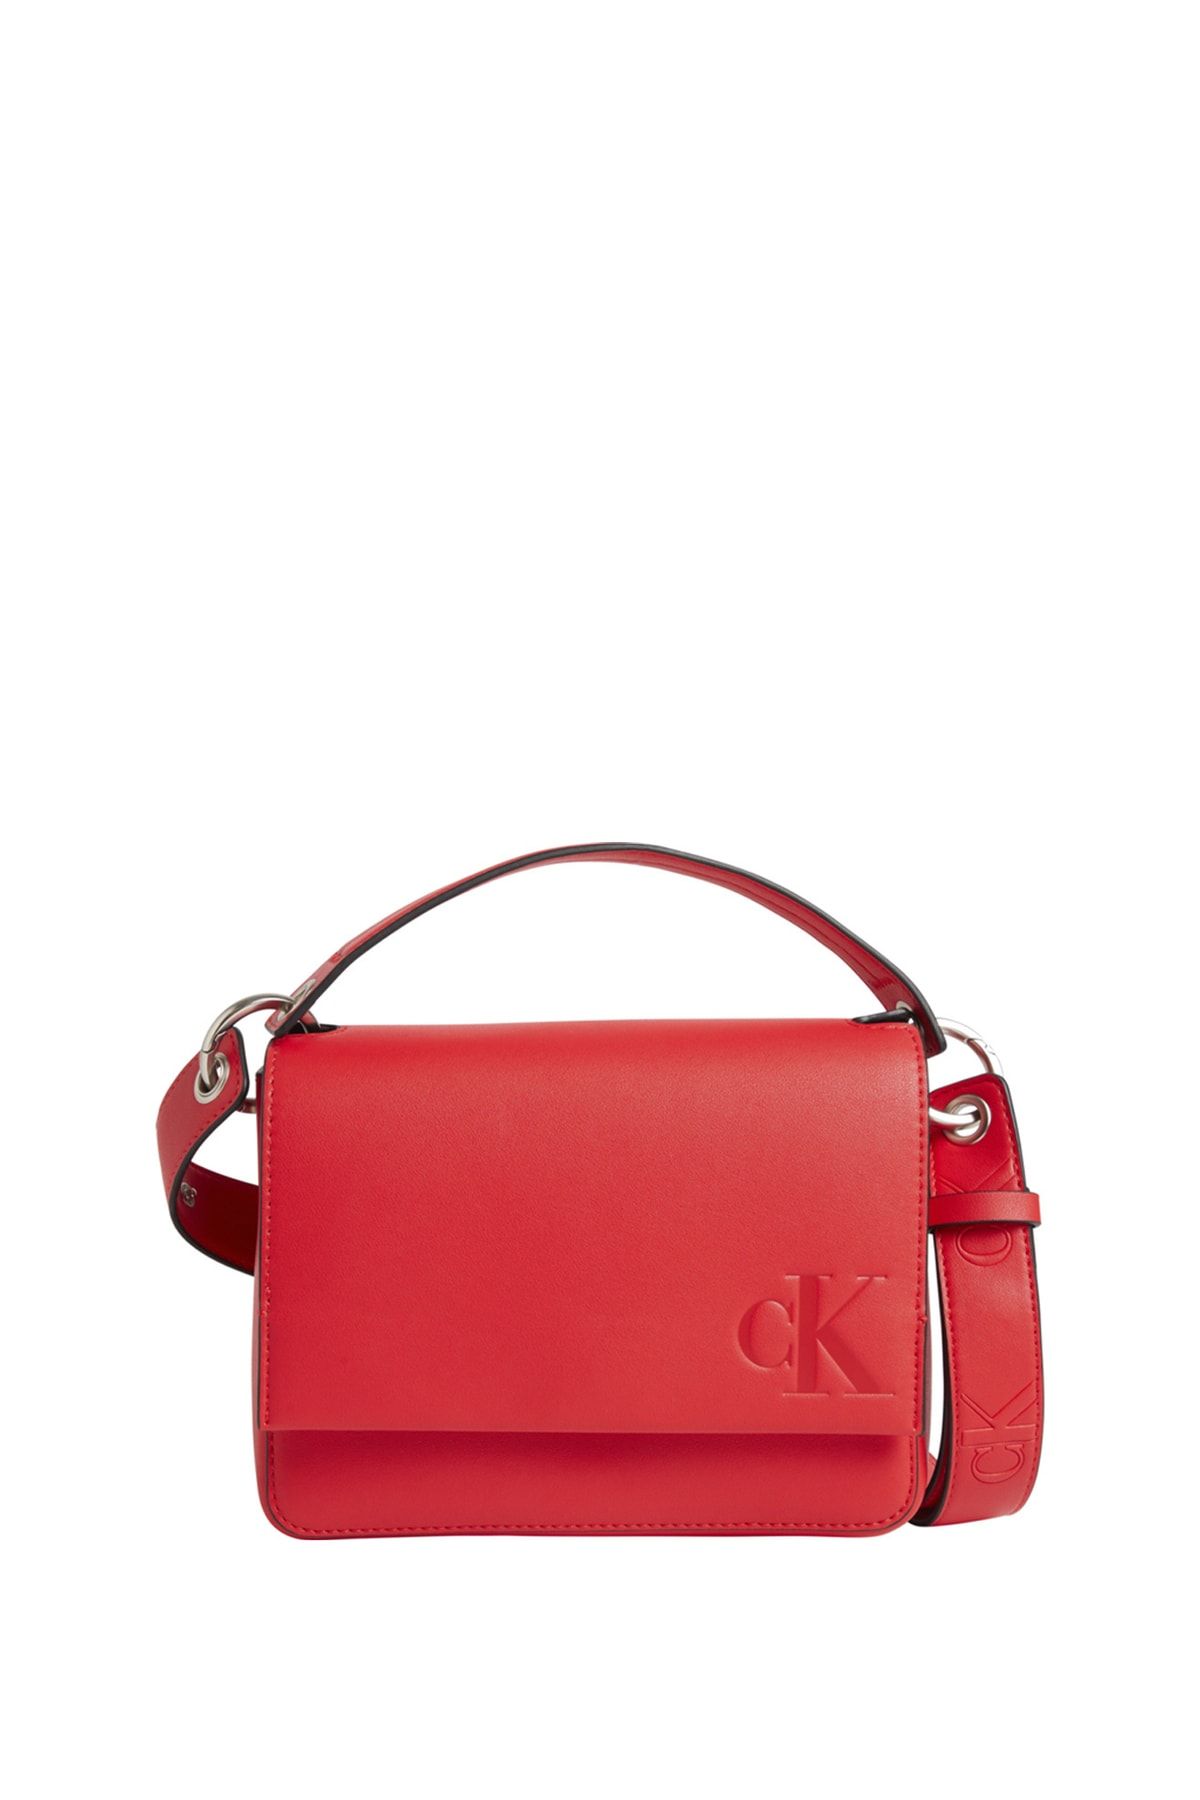 Calvin Klein camera sling bag | Shopee Philippines